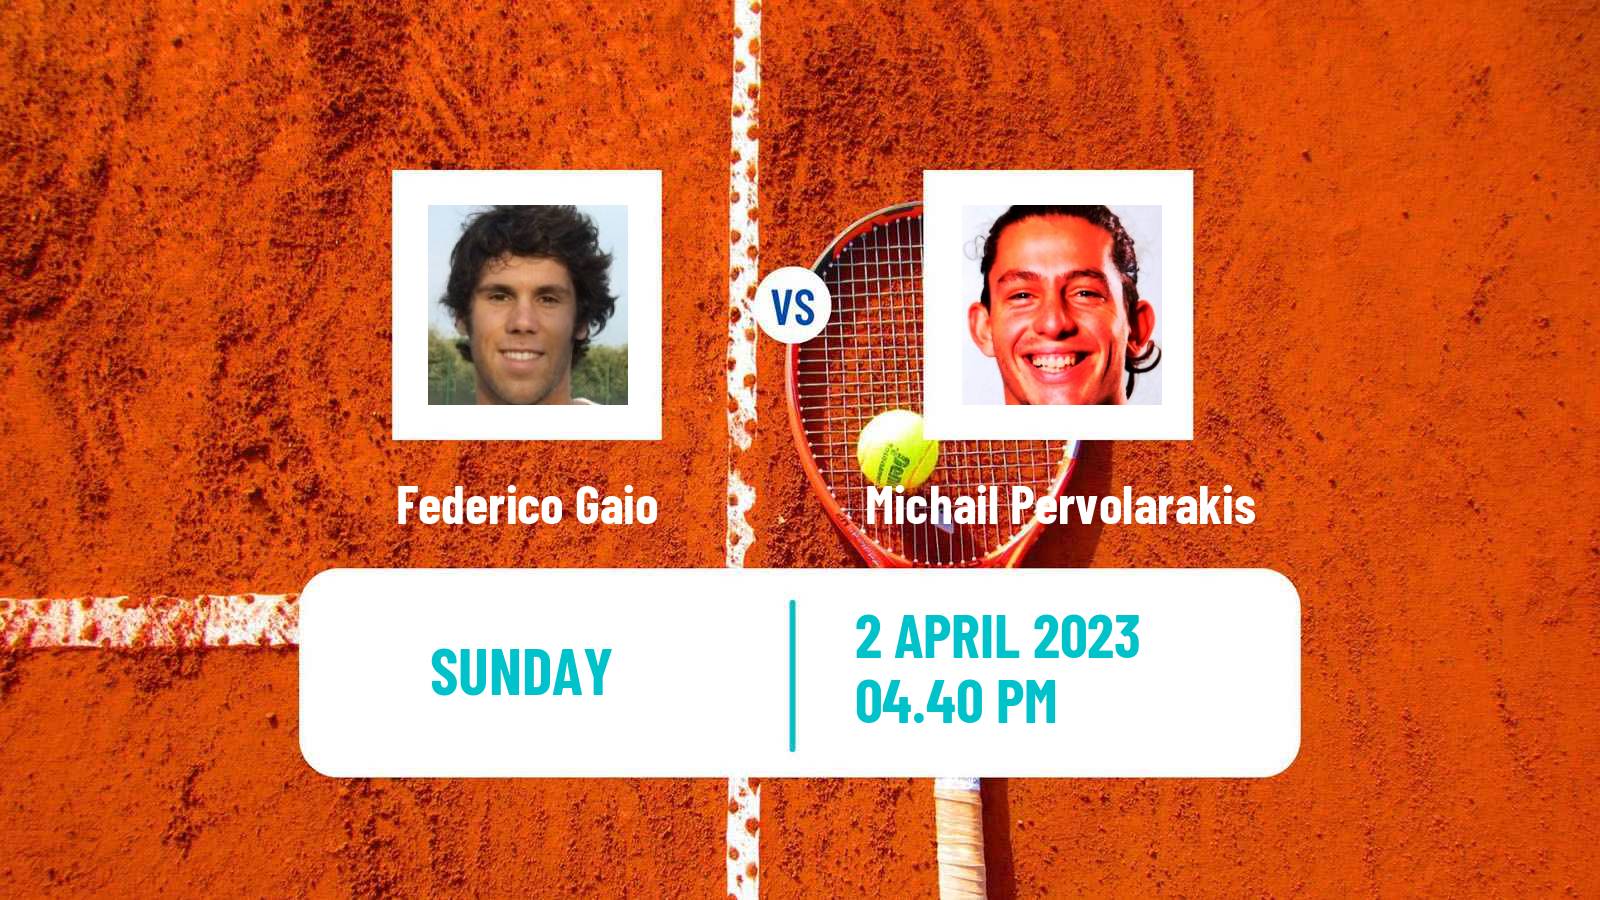 Tennis ATP Challenger Federico Gaio - Michail Pervolarakis